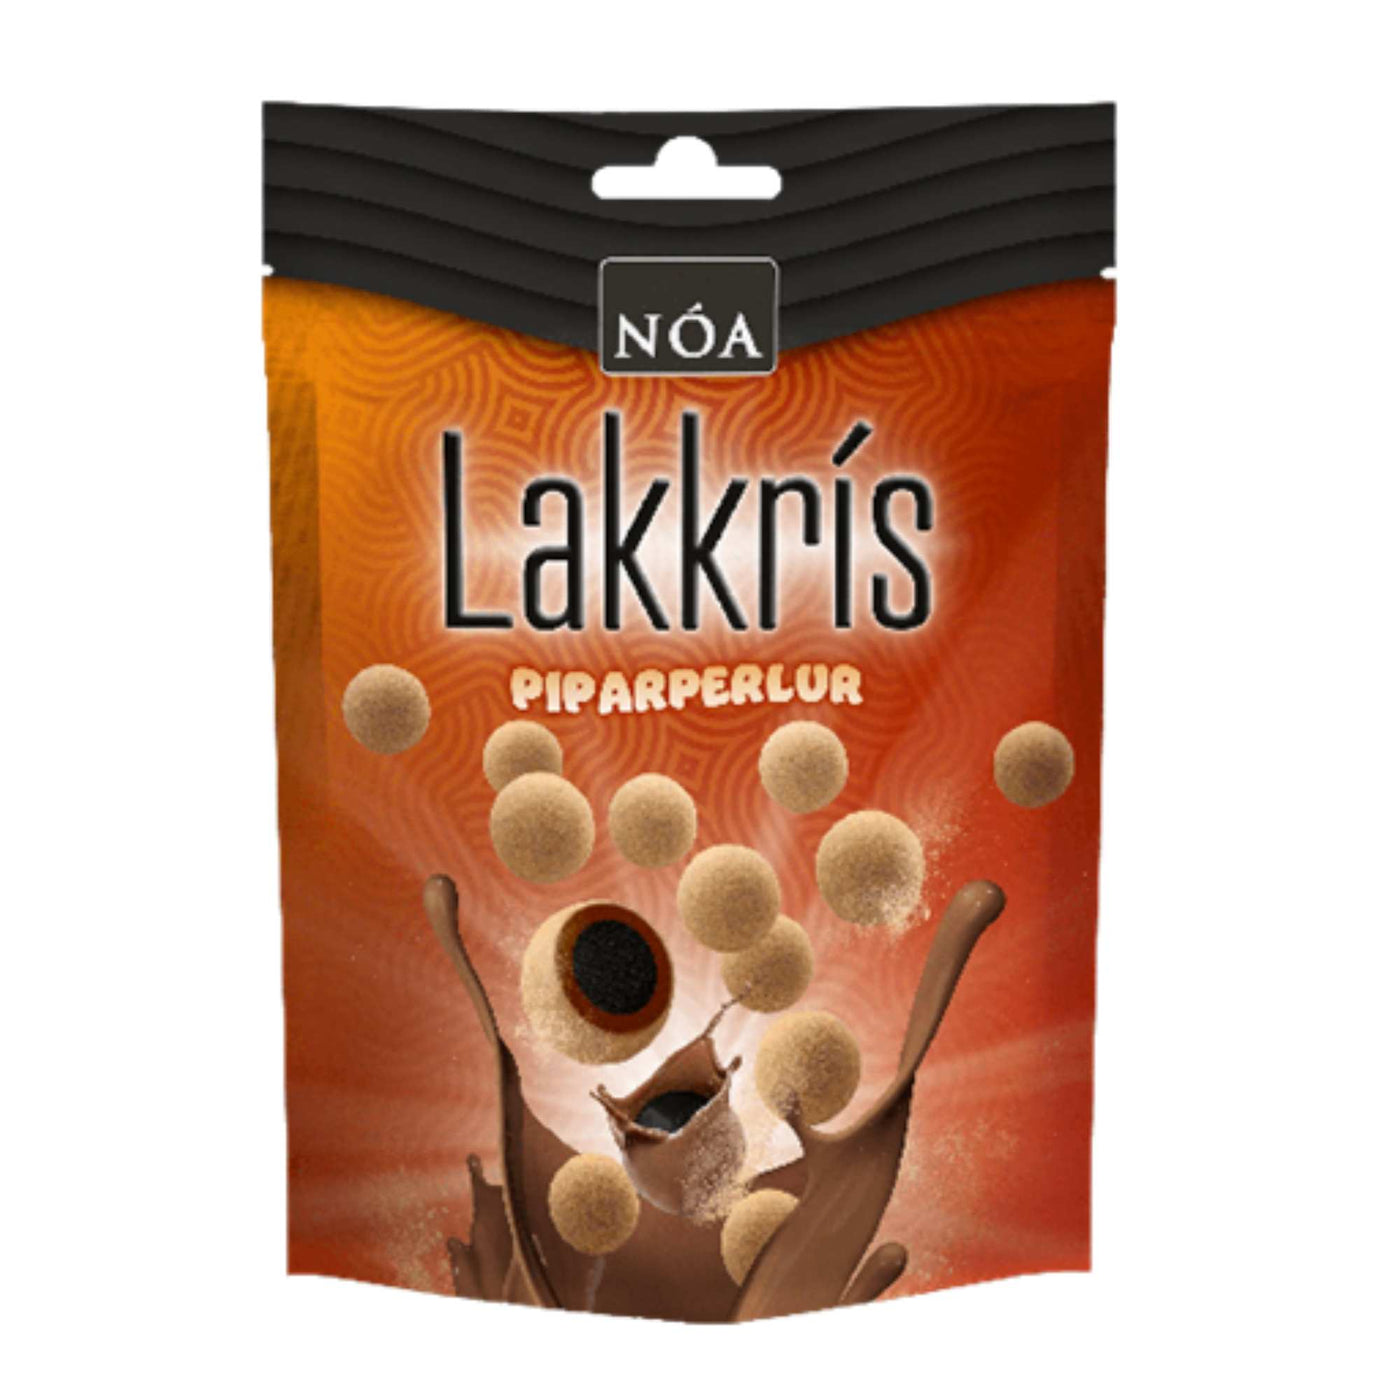 Nóa Pipar Lakkrís Piparperlur – Chocolate Coated Liquorice Balls (125g)